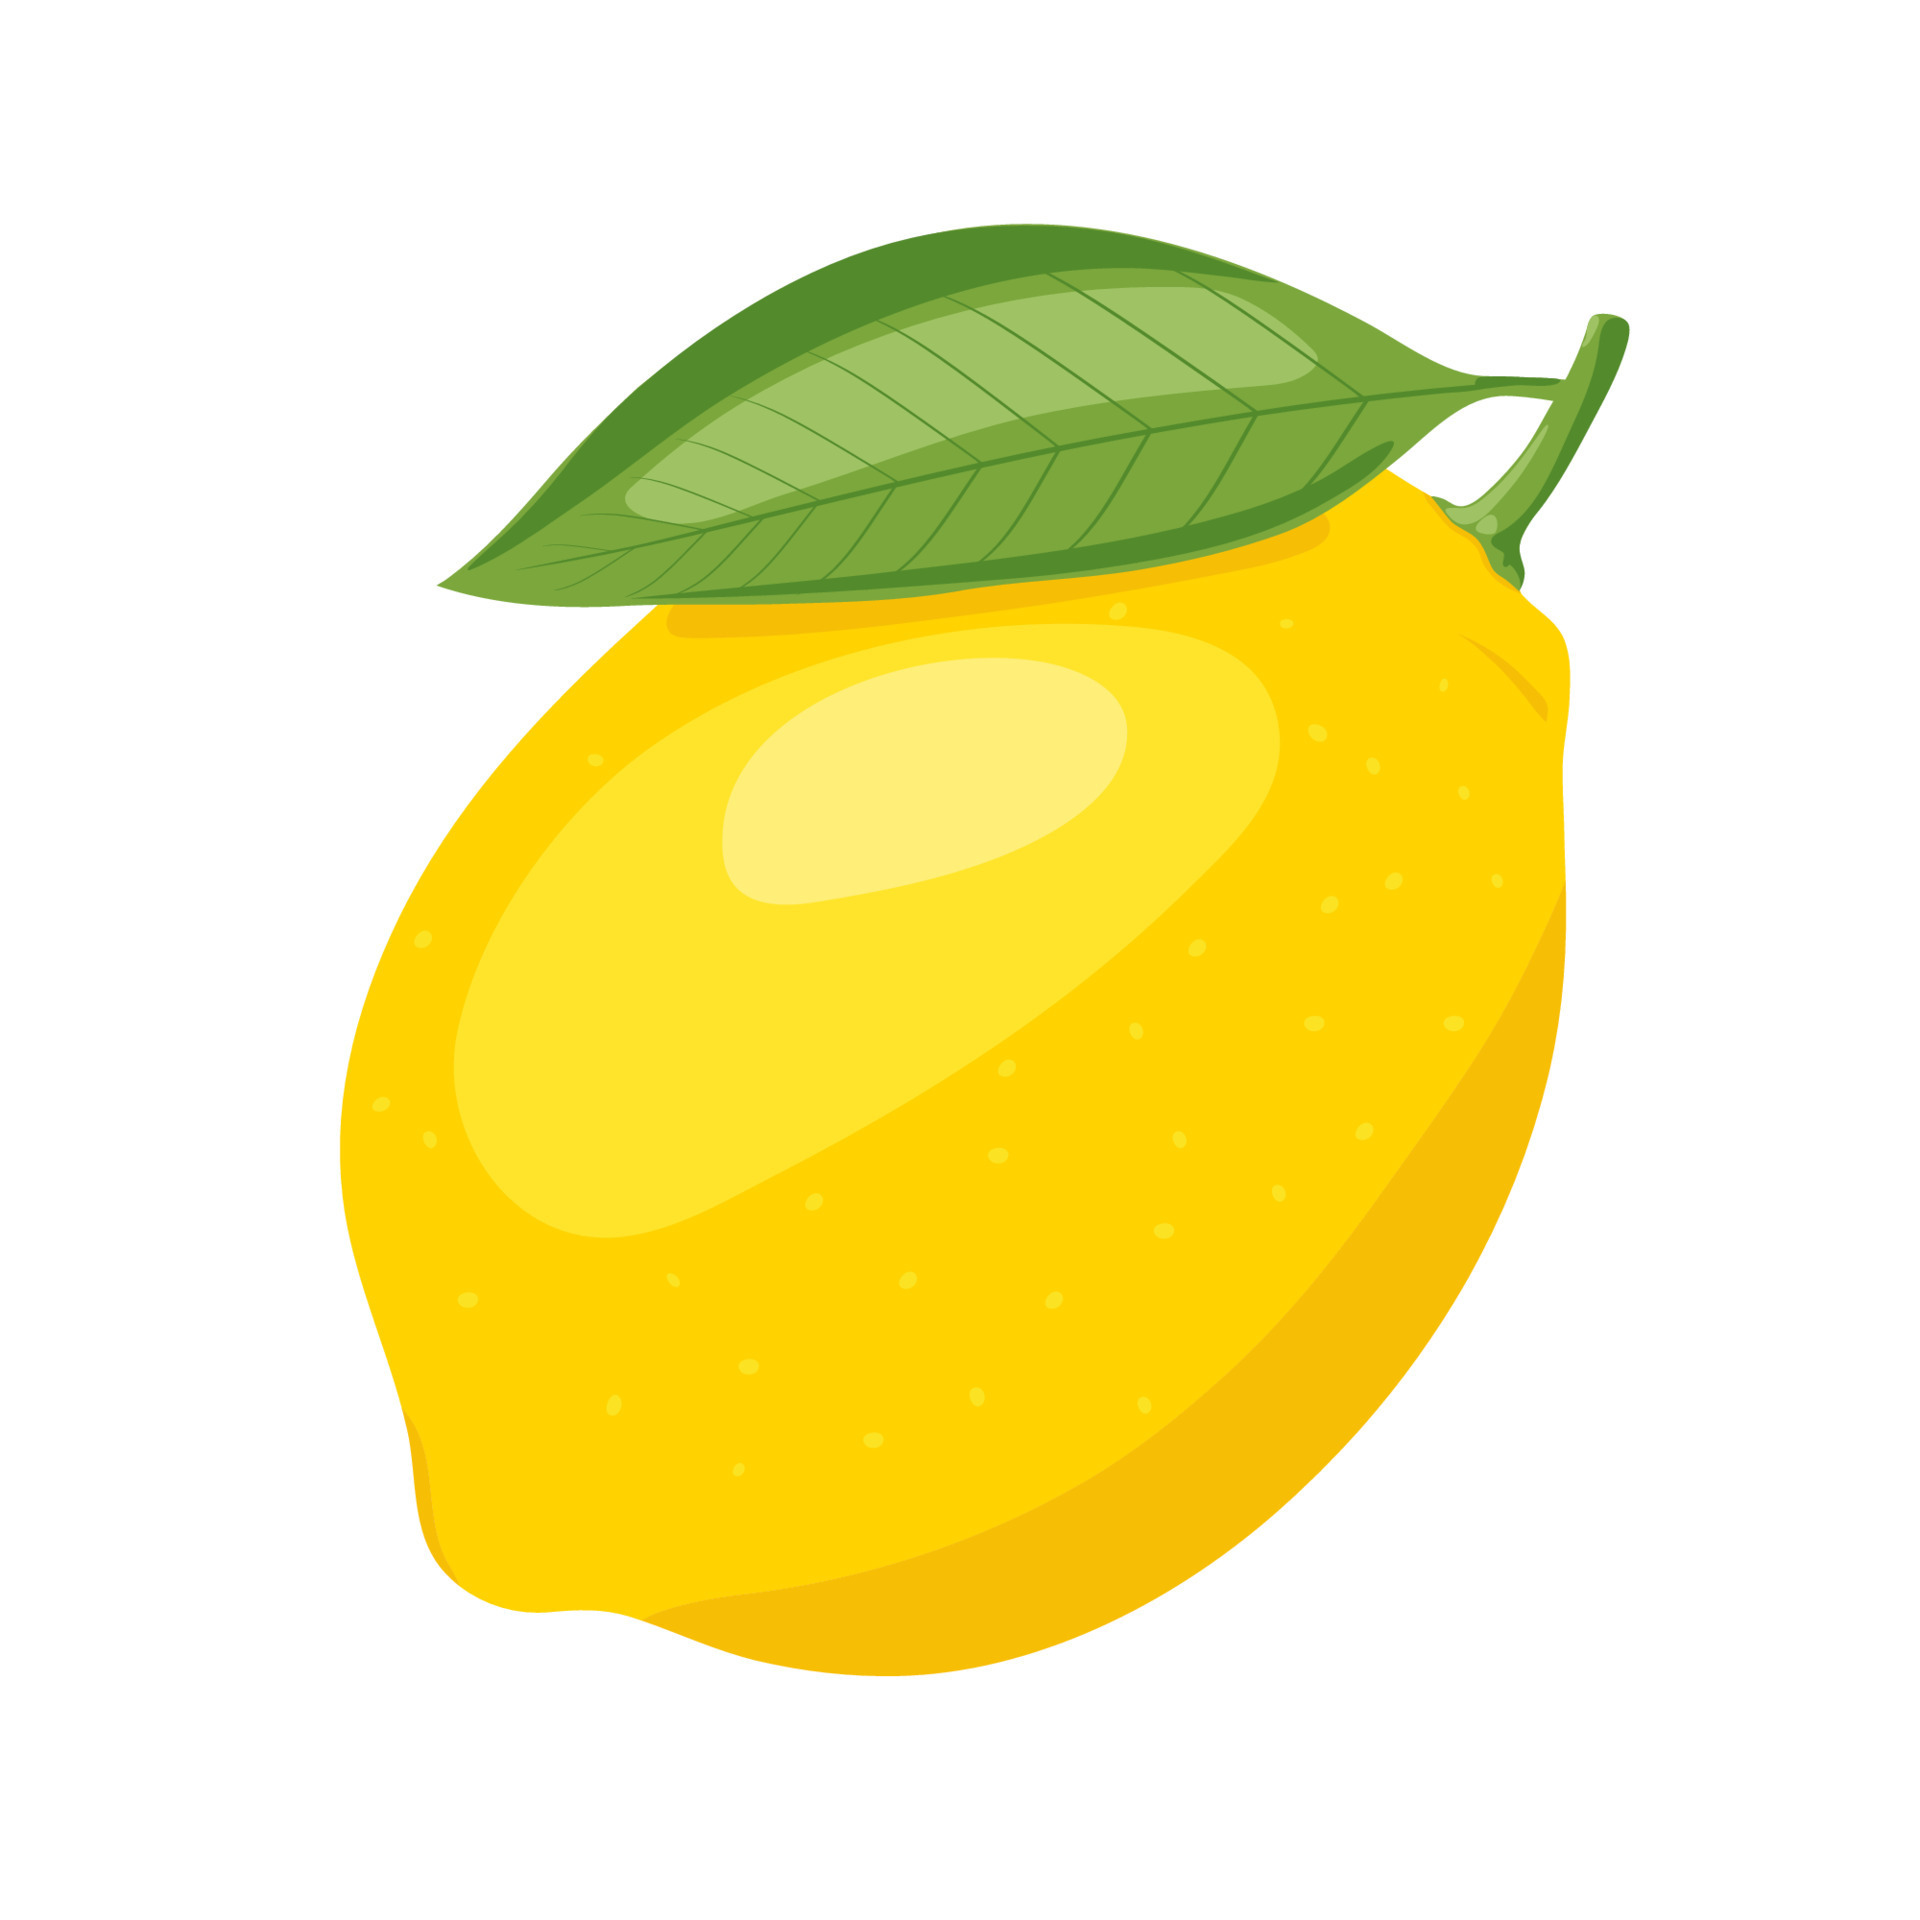 Yellow lemon vector icon illustration isolated on white background ...